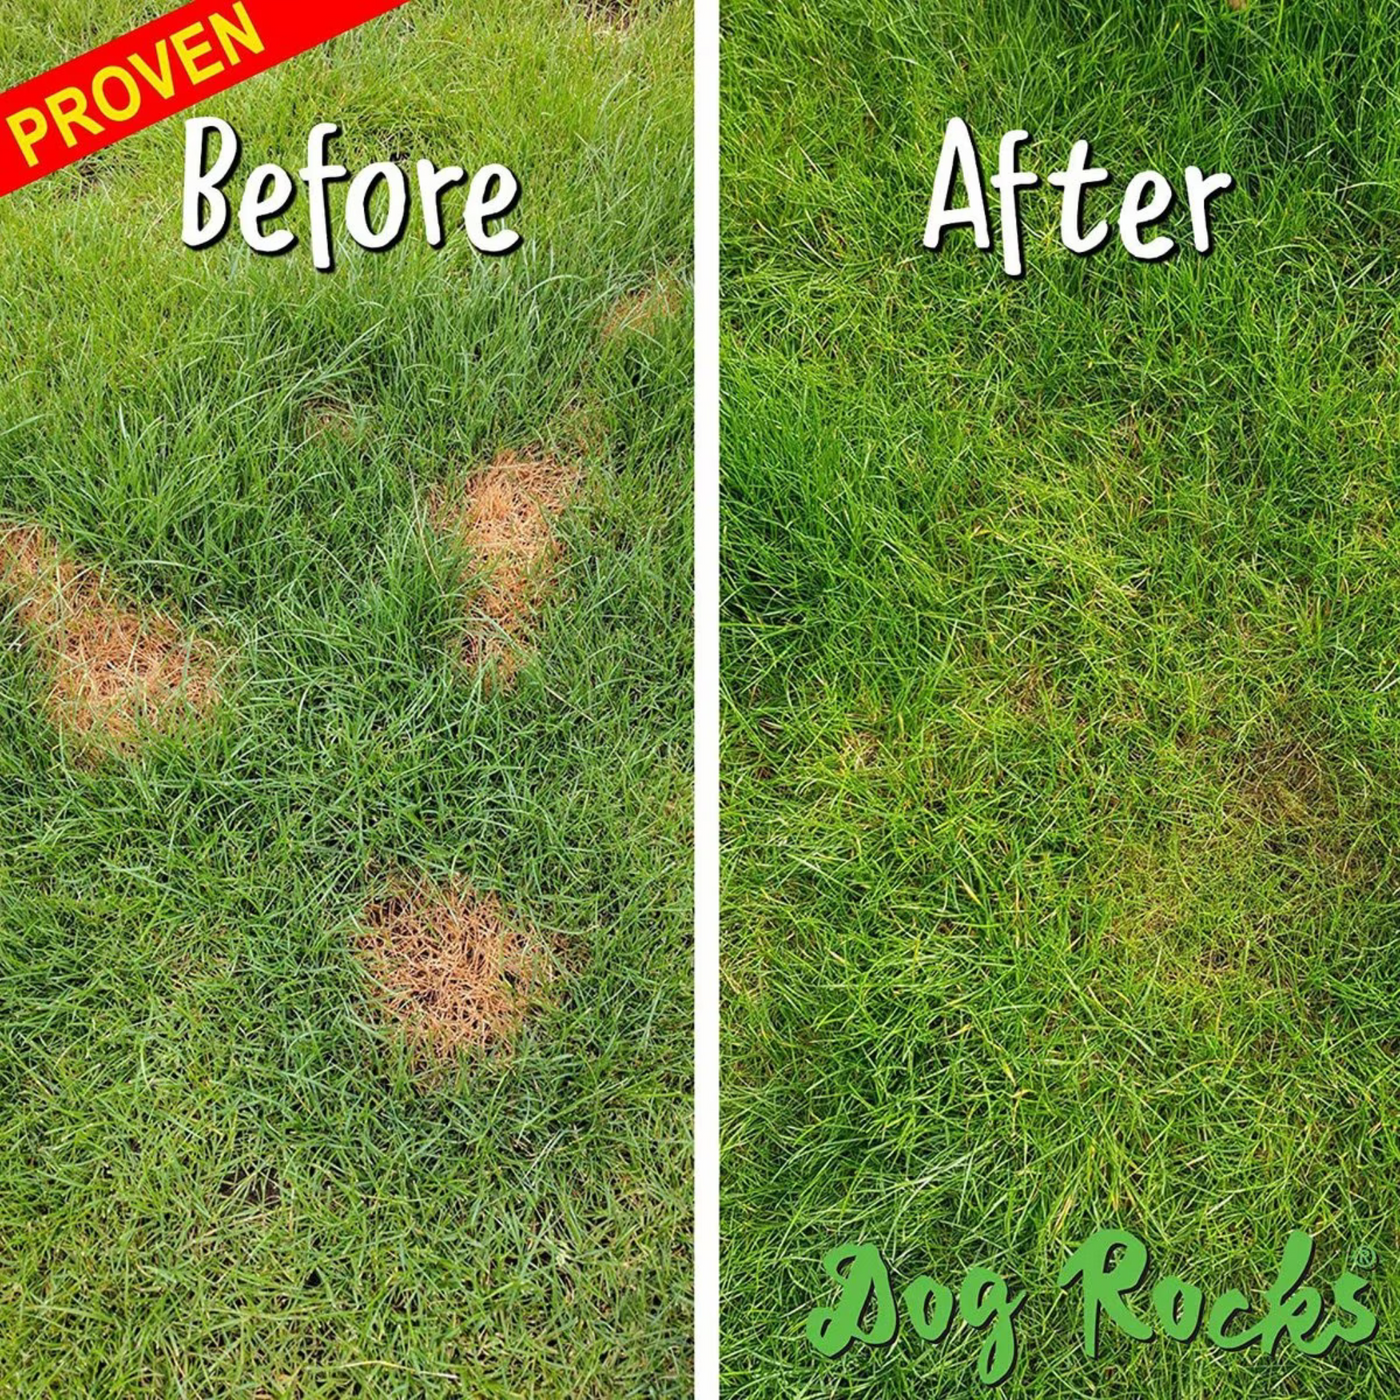 Dog Rocks Grass Burn Prevention